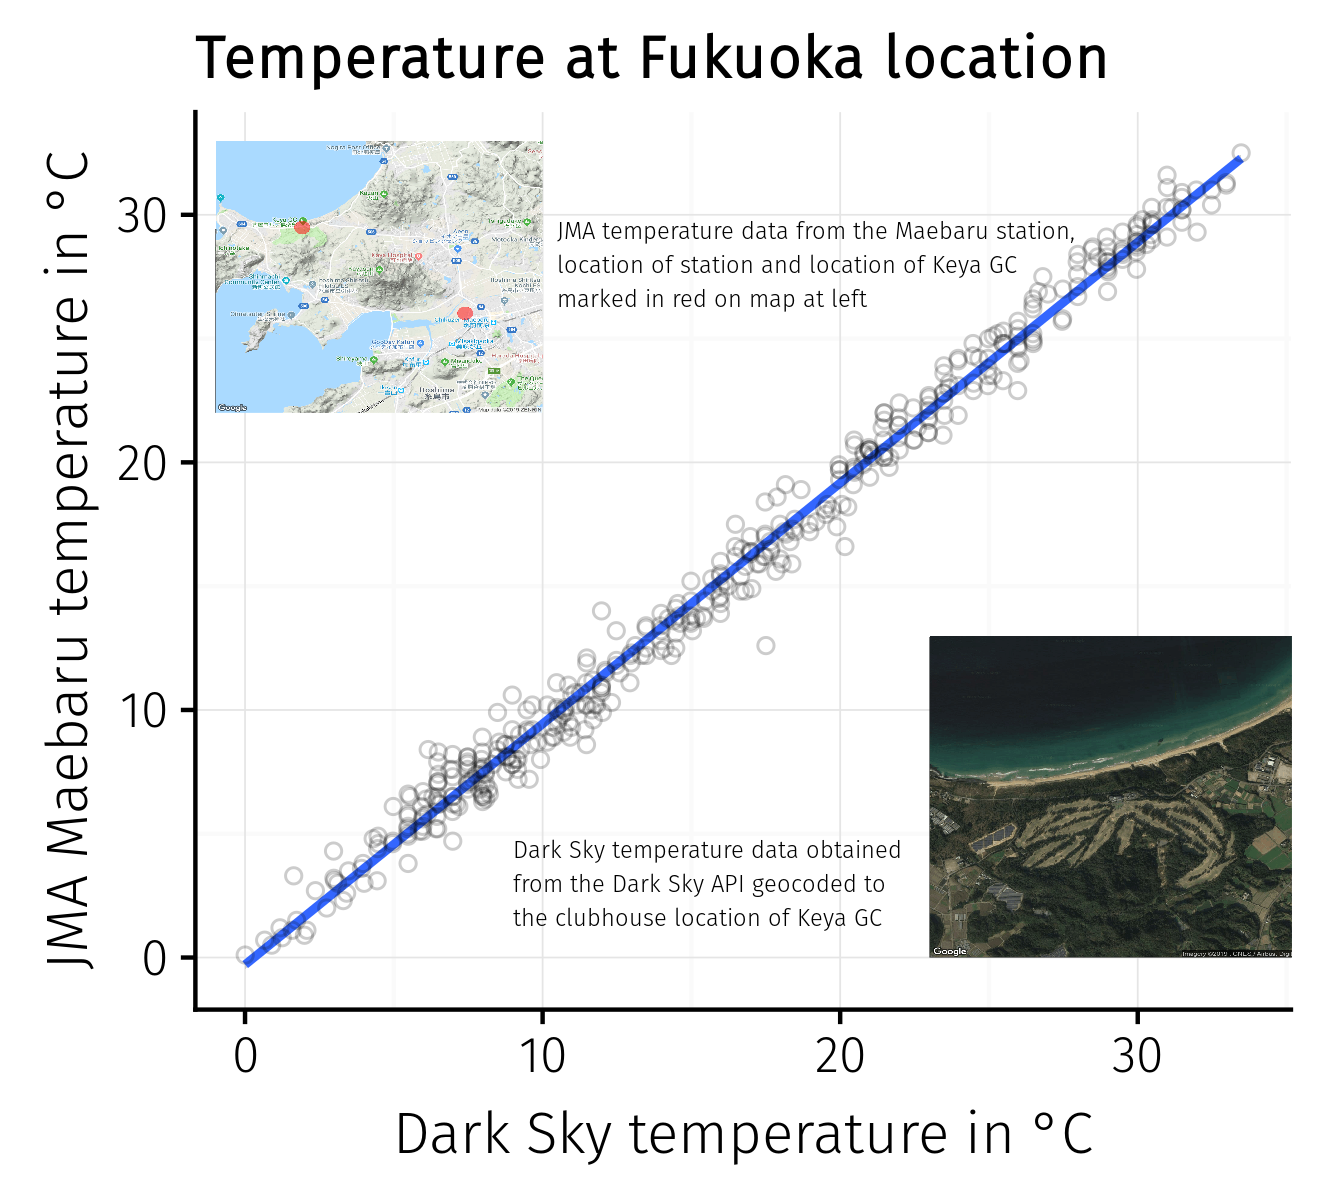 keya dark sky vs maebaru jma temperature data